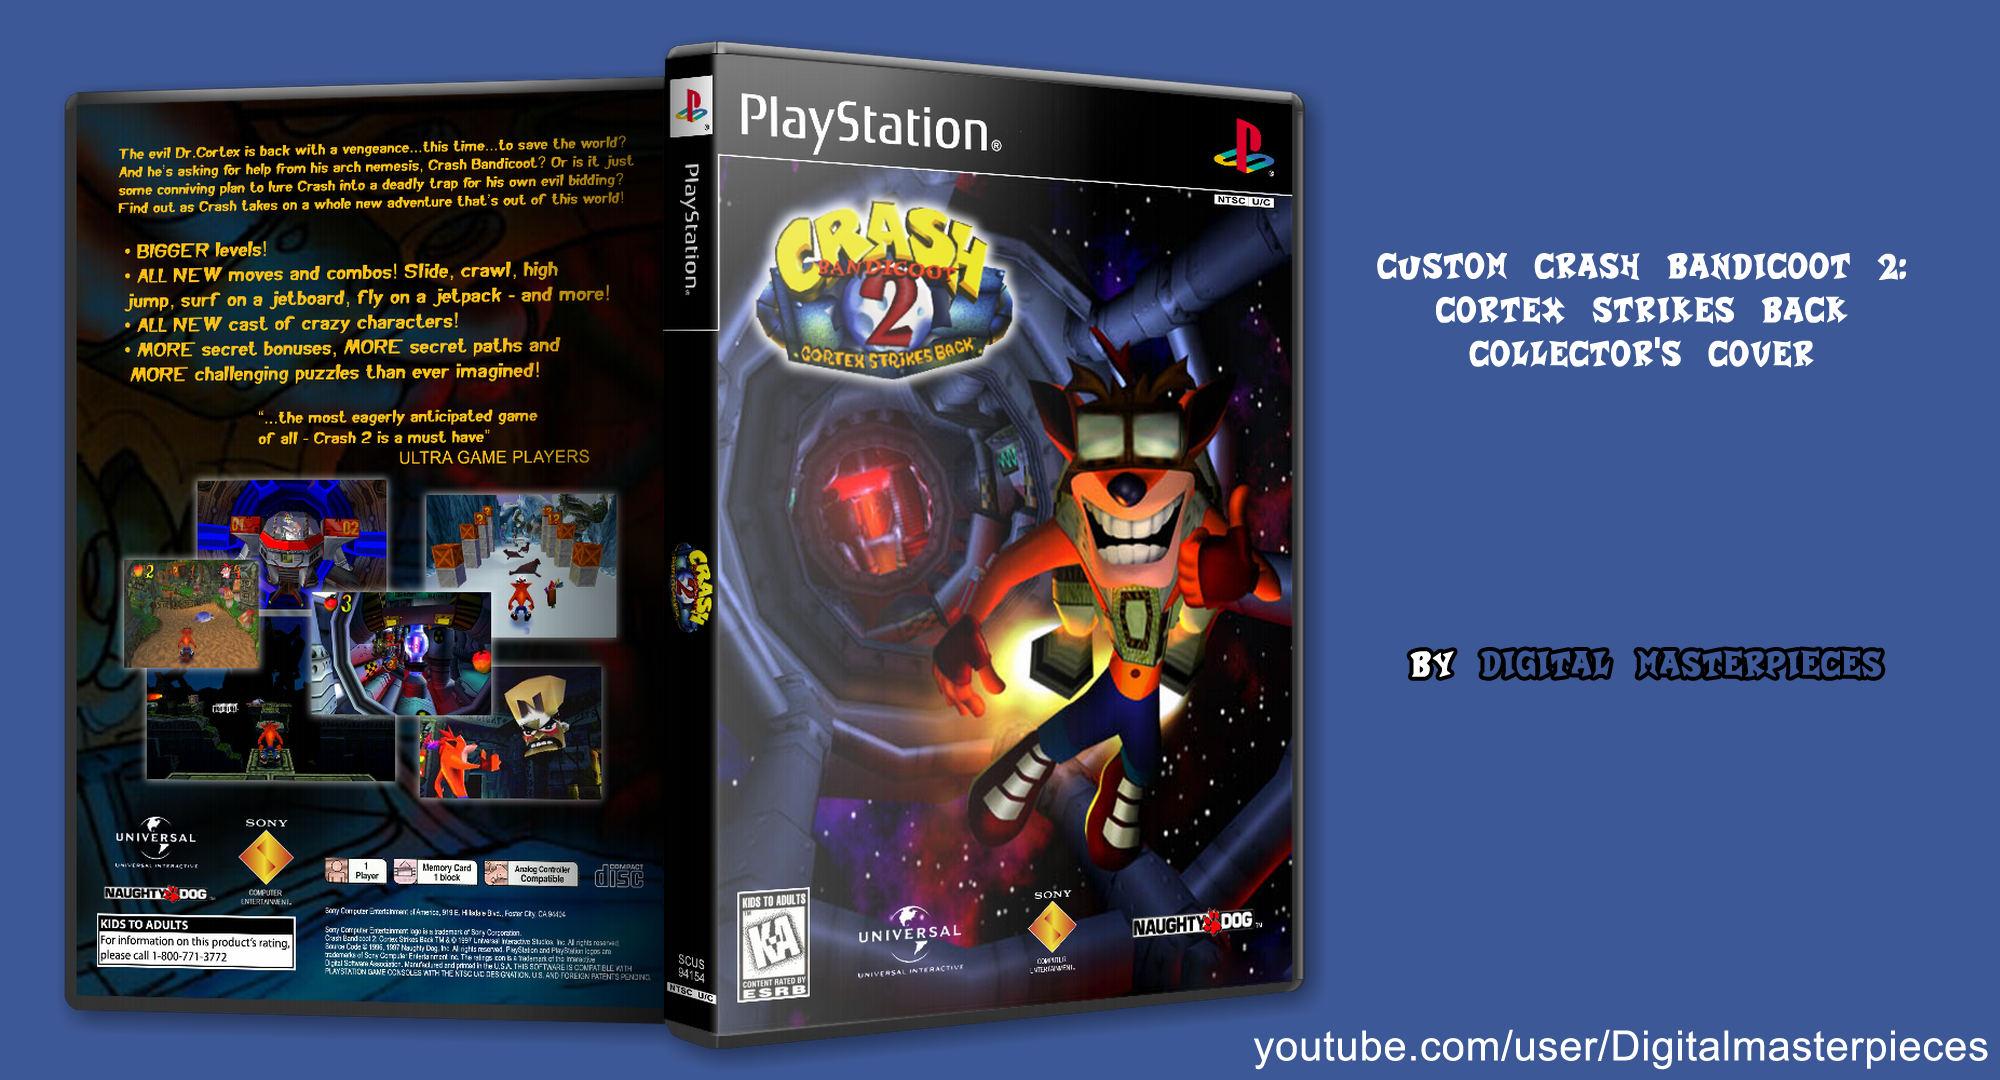 Custom Crash Bandicoot 2 PS1 Cover box cover